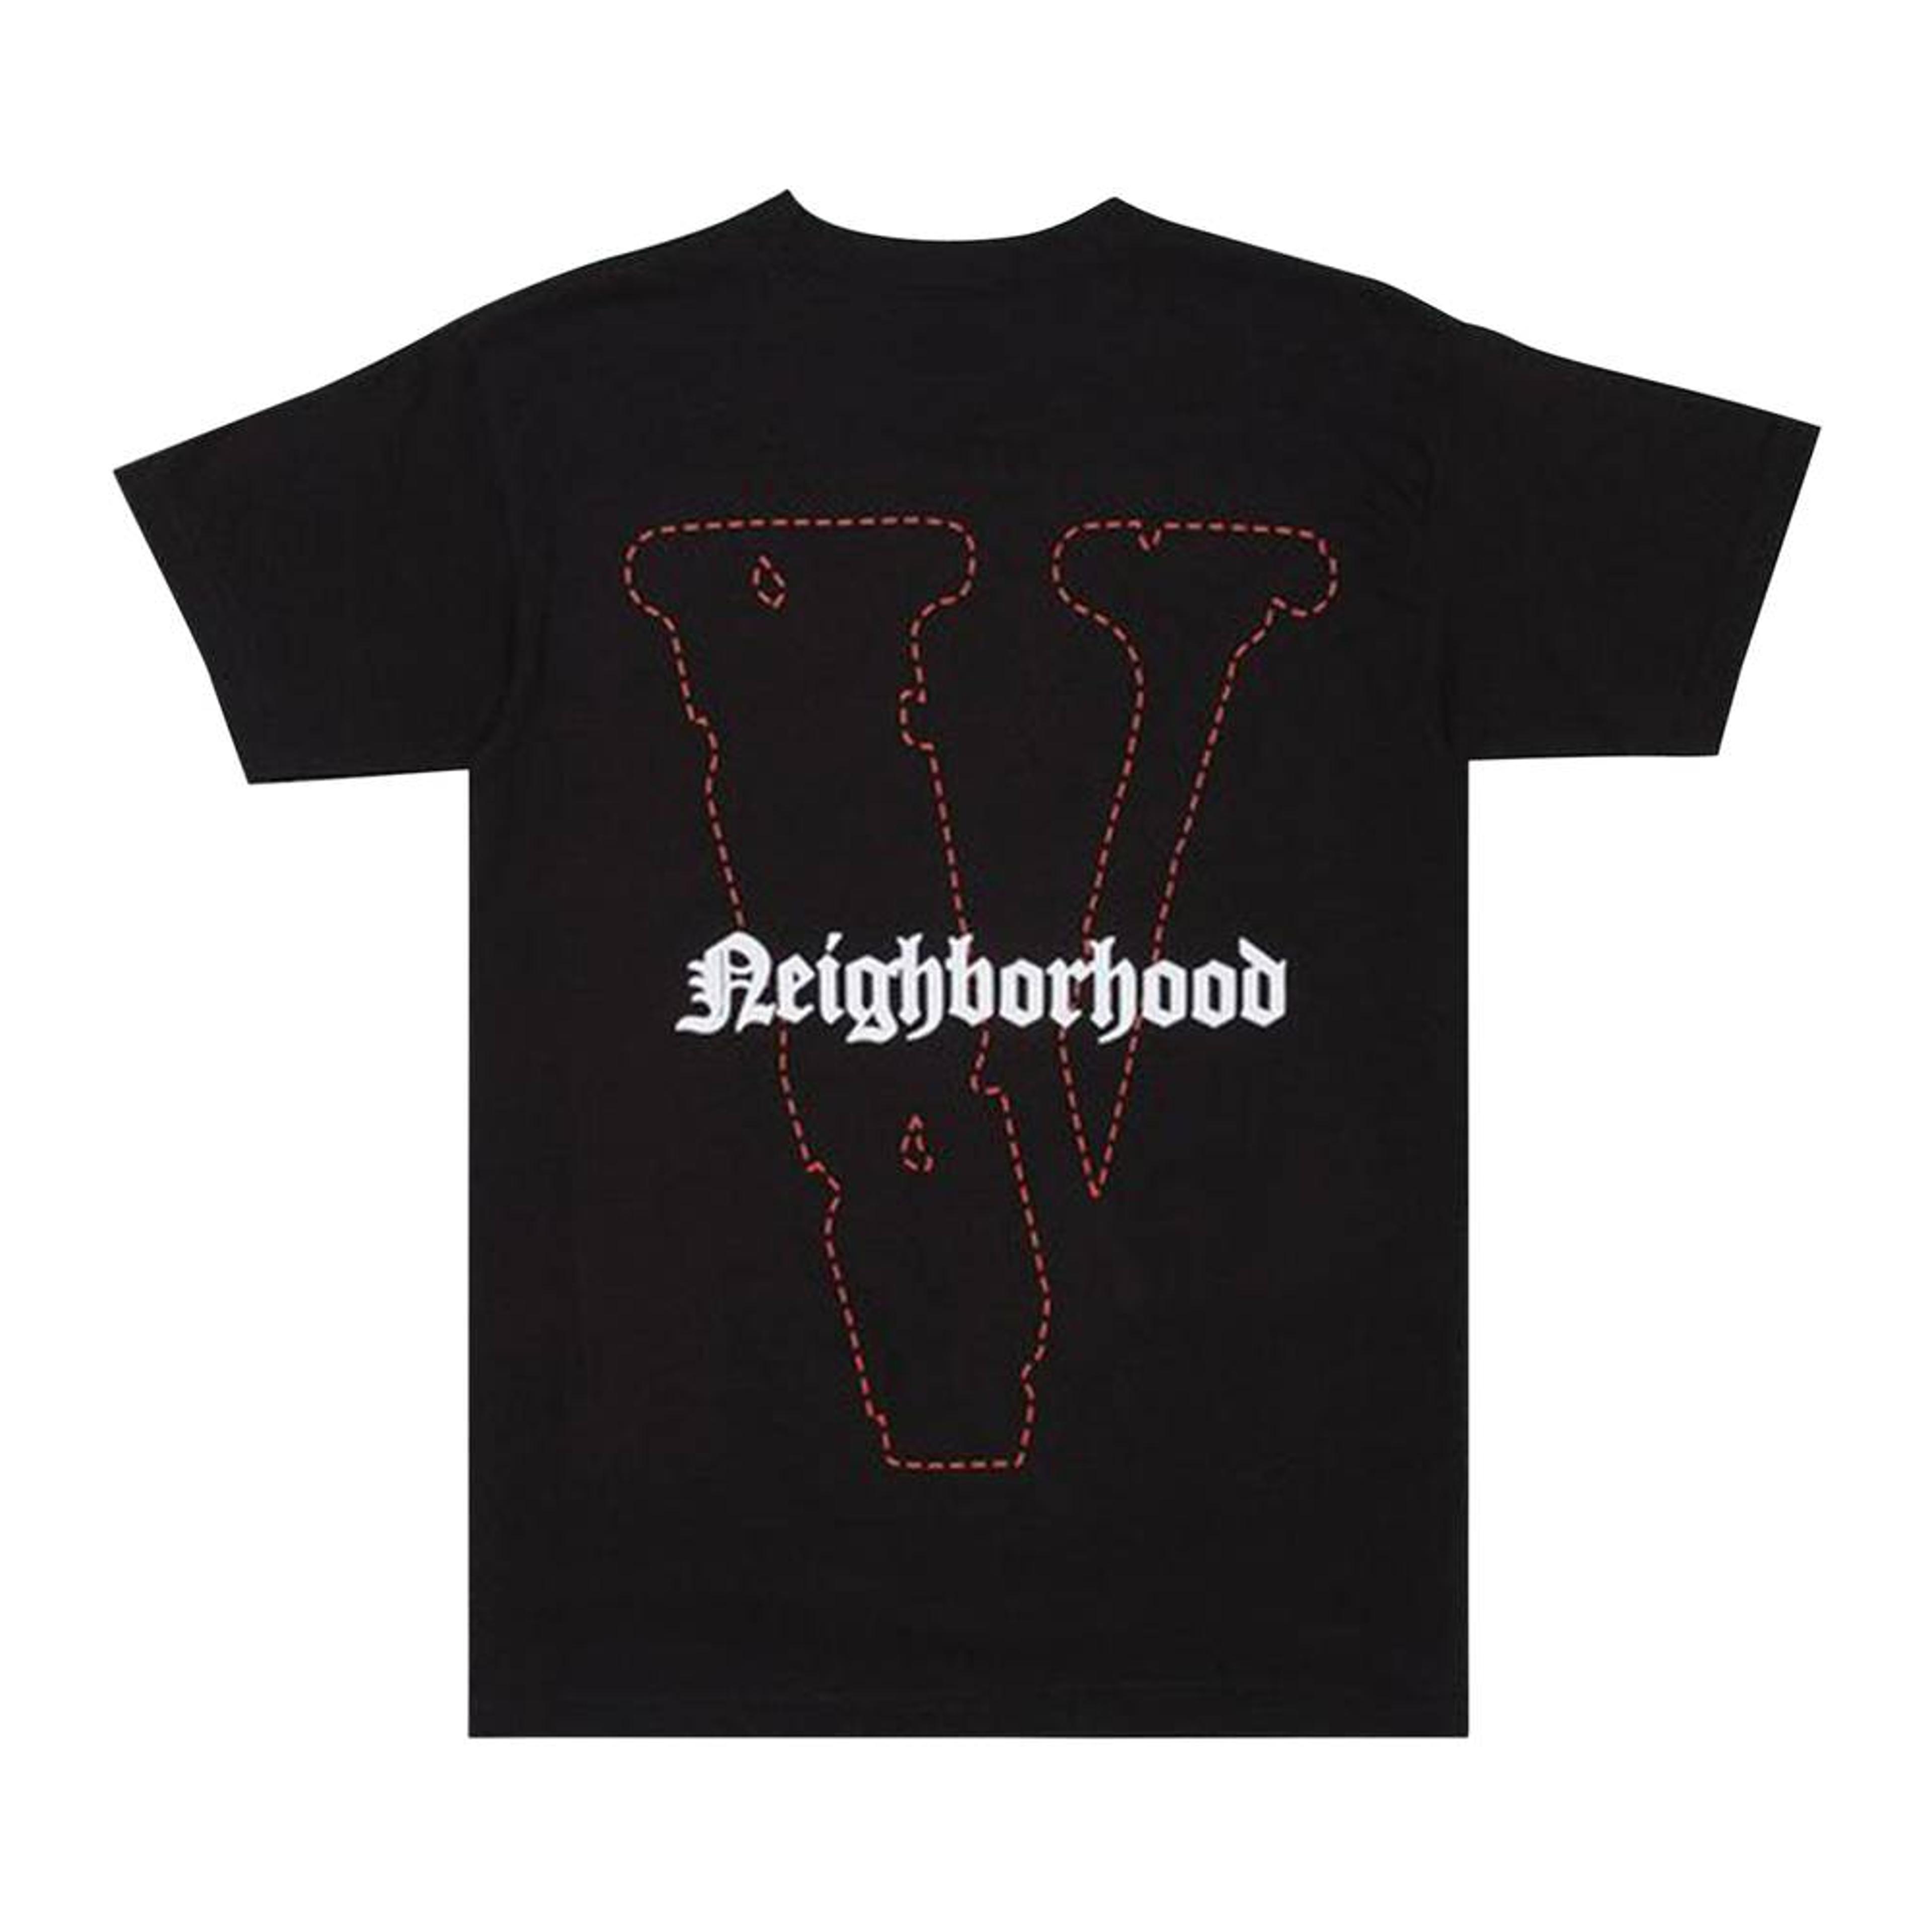 Alternate View 1 of Vlone x Neighborhood Skull T-Shirt Black / Red